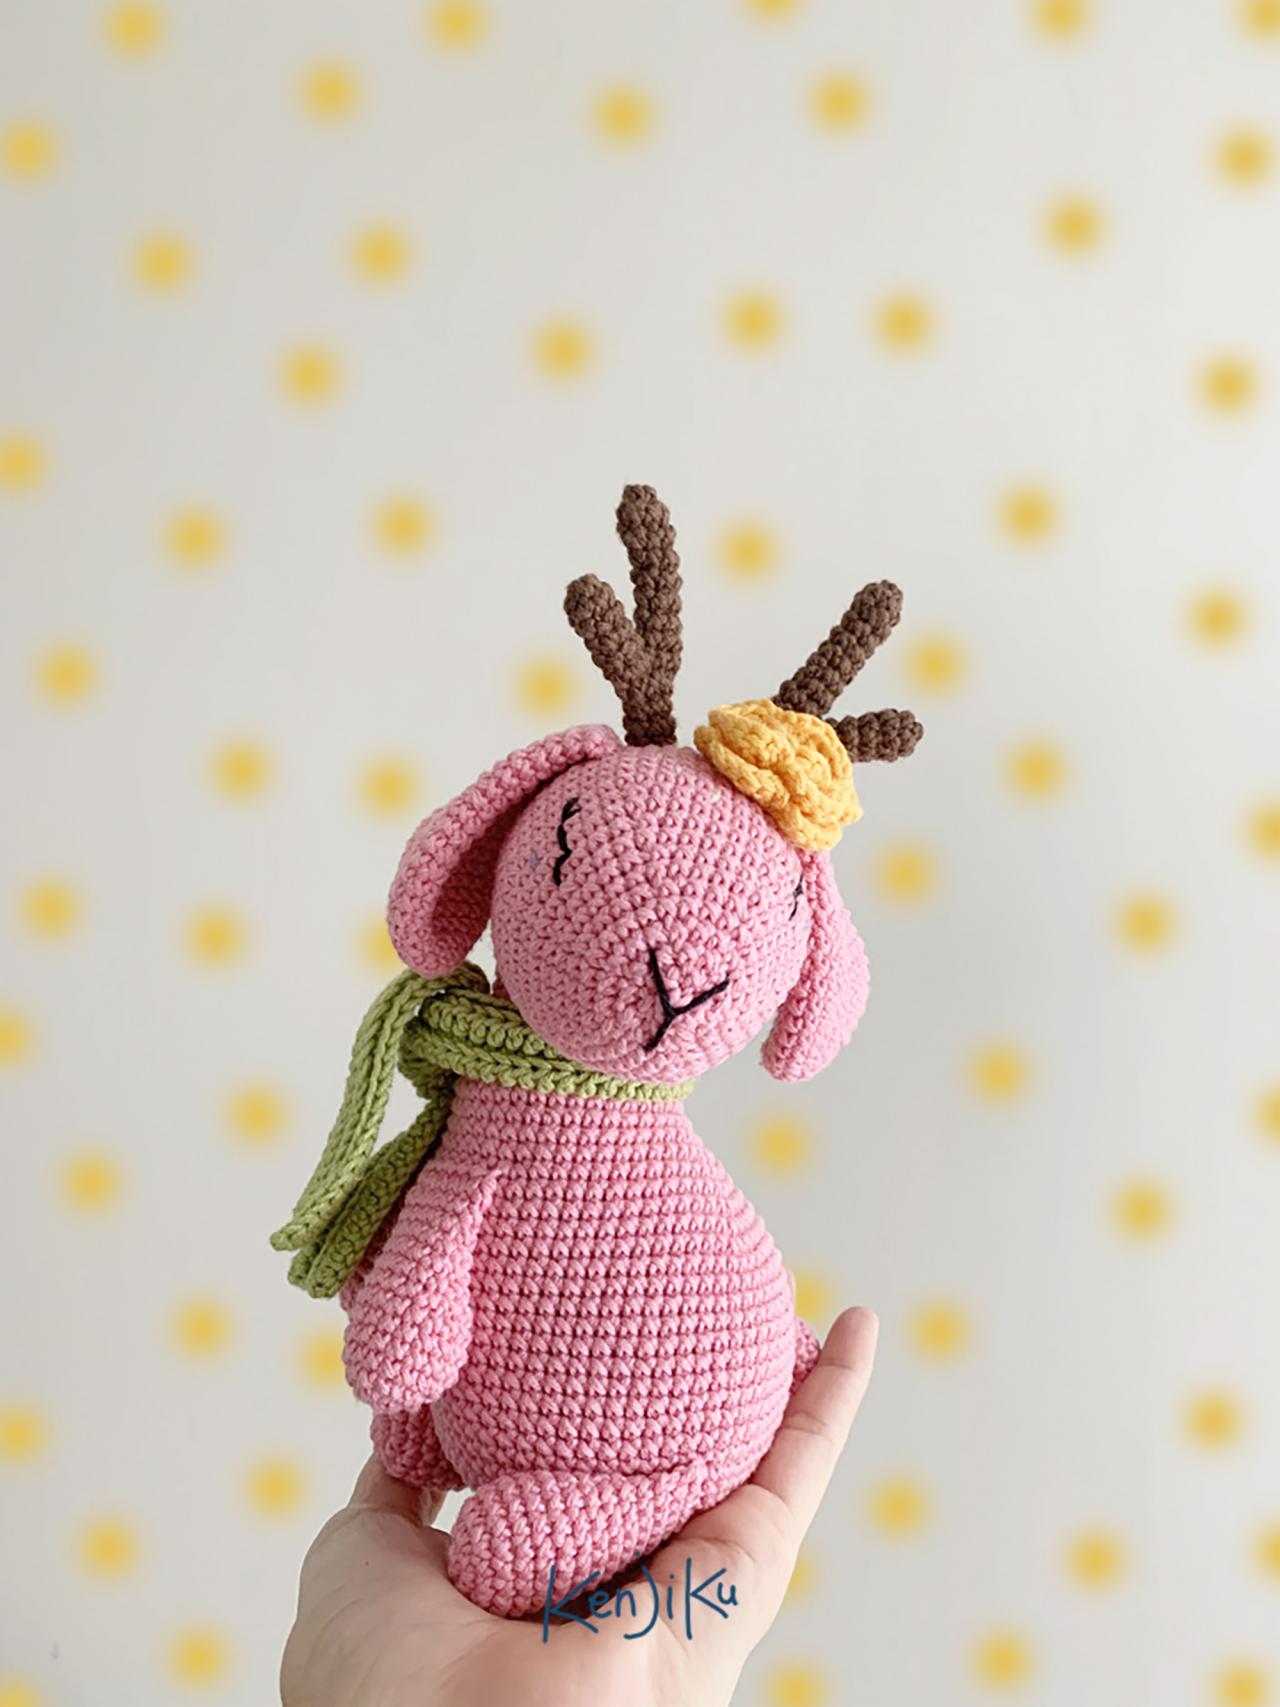 Finished the sweetest little amigurumi jackalope last night : r/crochet